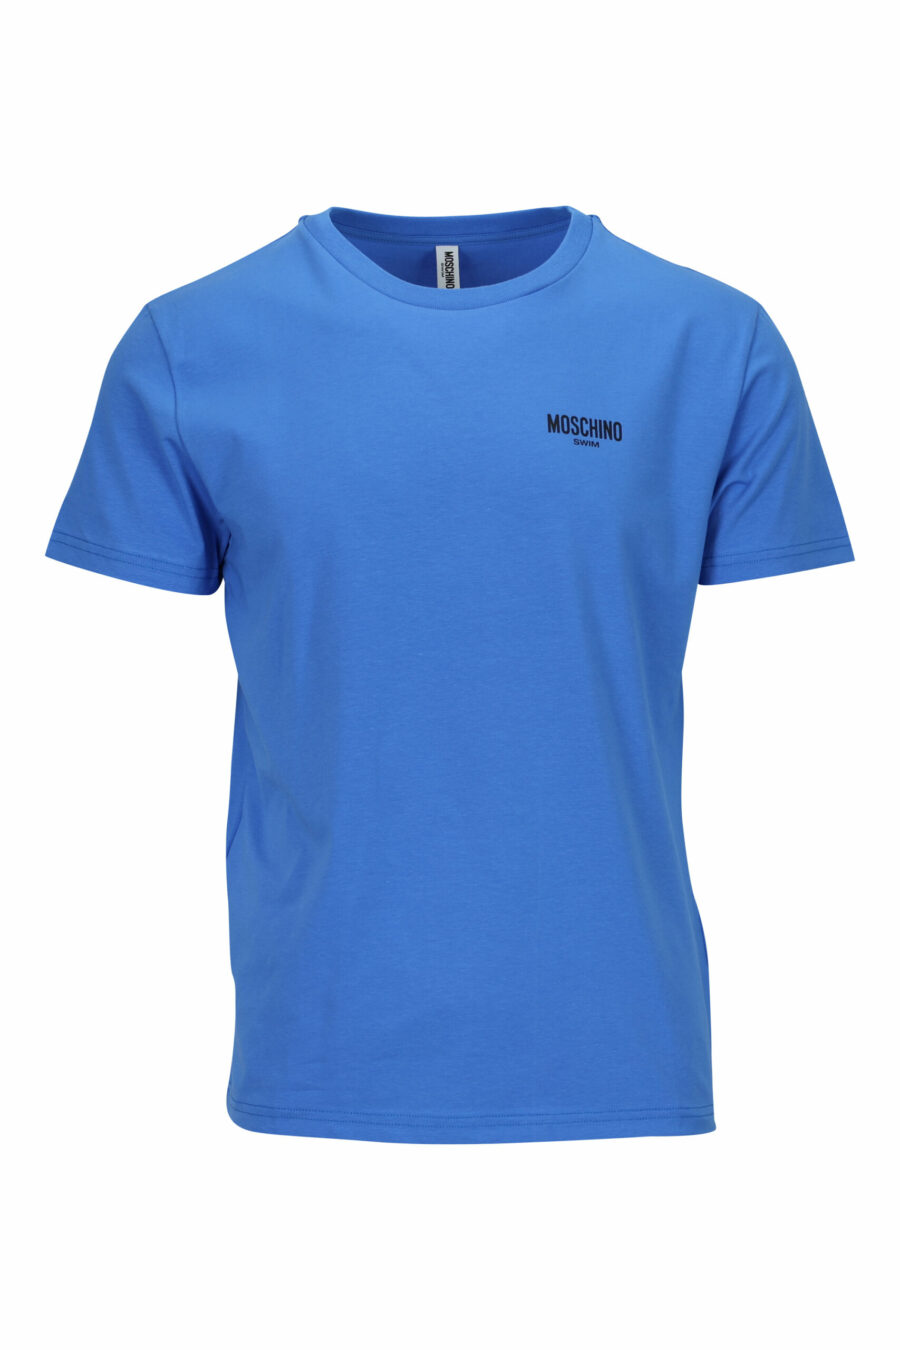 Camiseta azul con minilogo "swim" - 667113673417 scaled